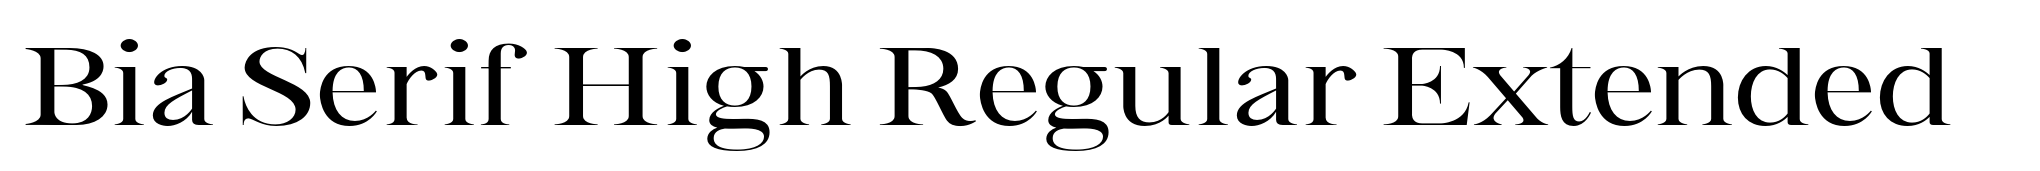 Bia Serif High Regular Extended image